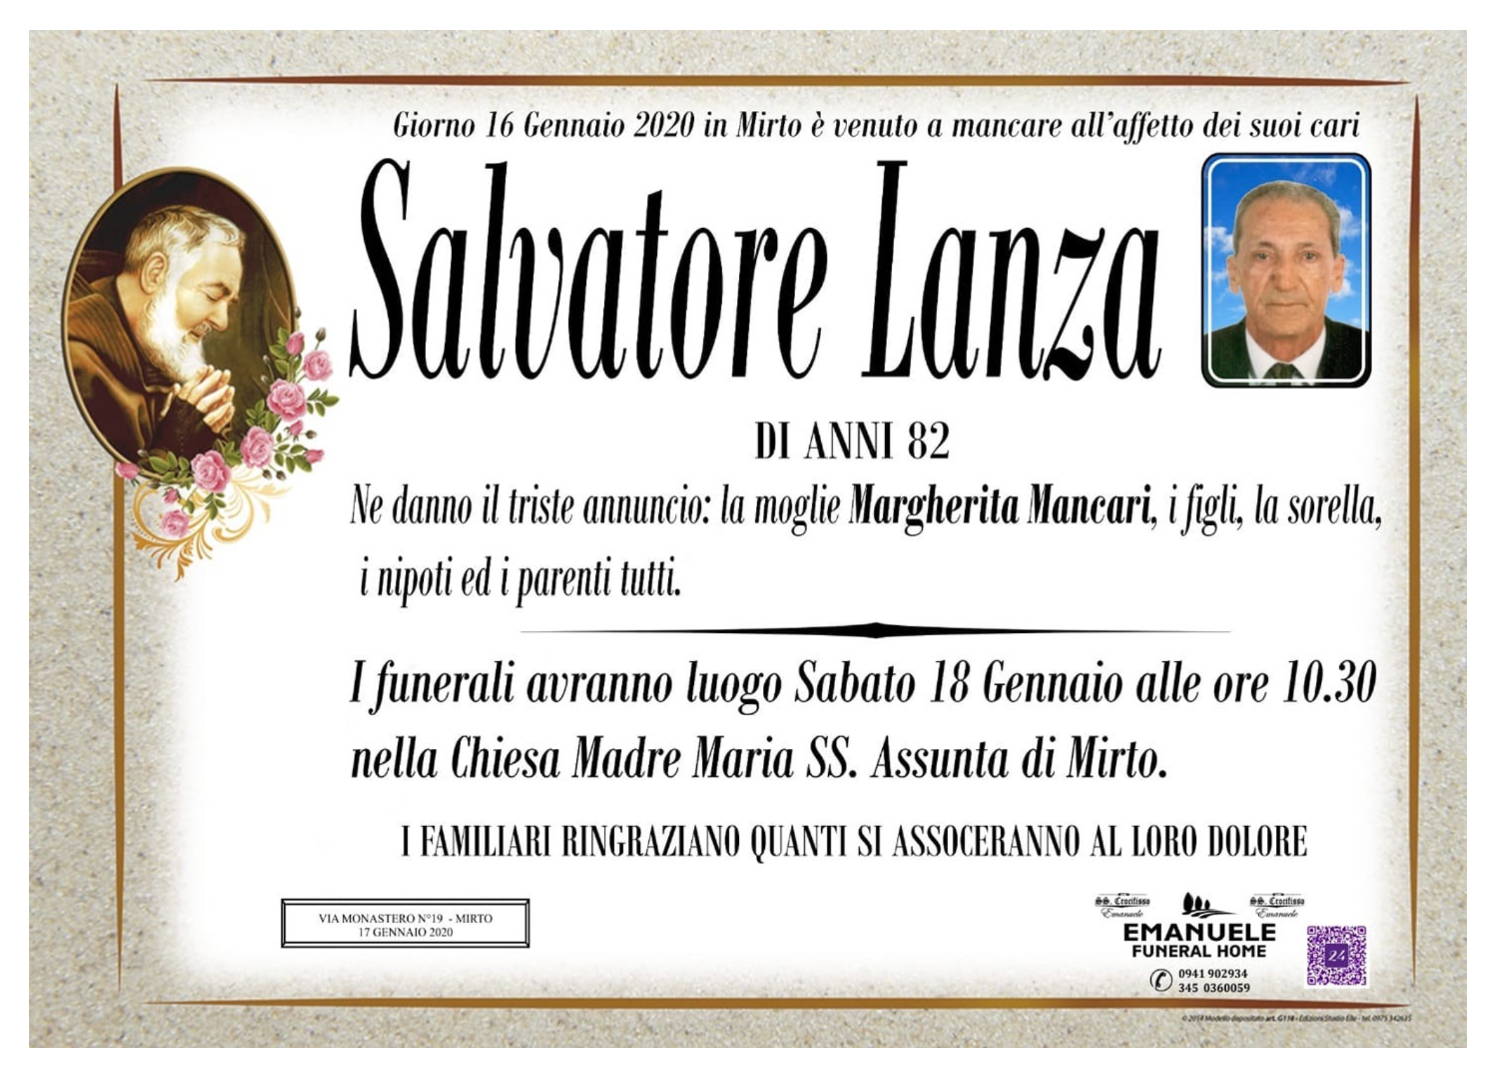 Salvatore Lanza